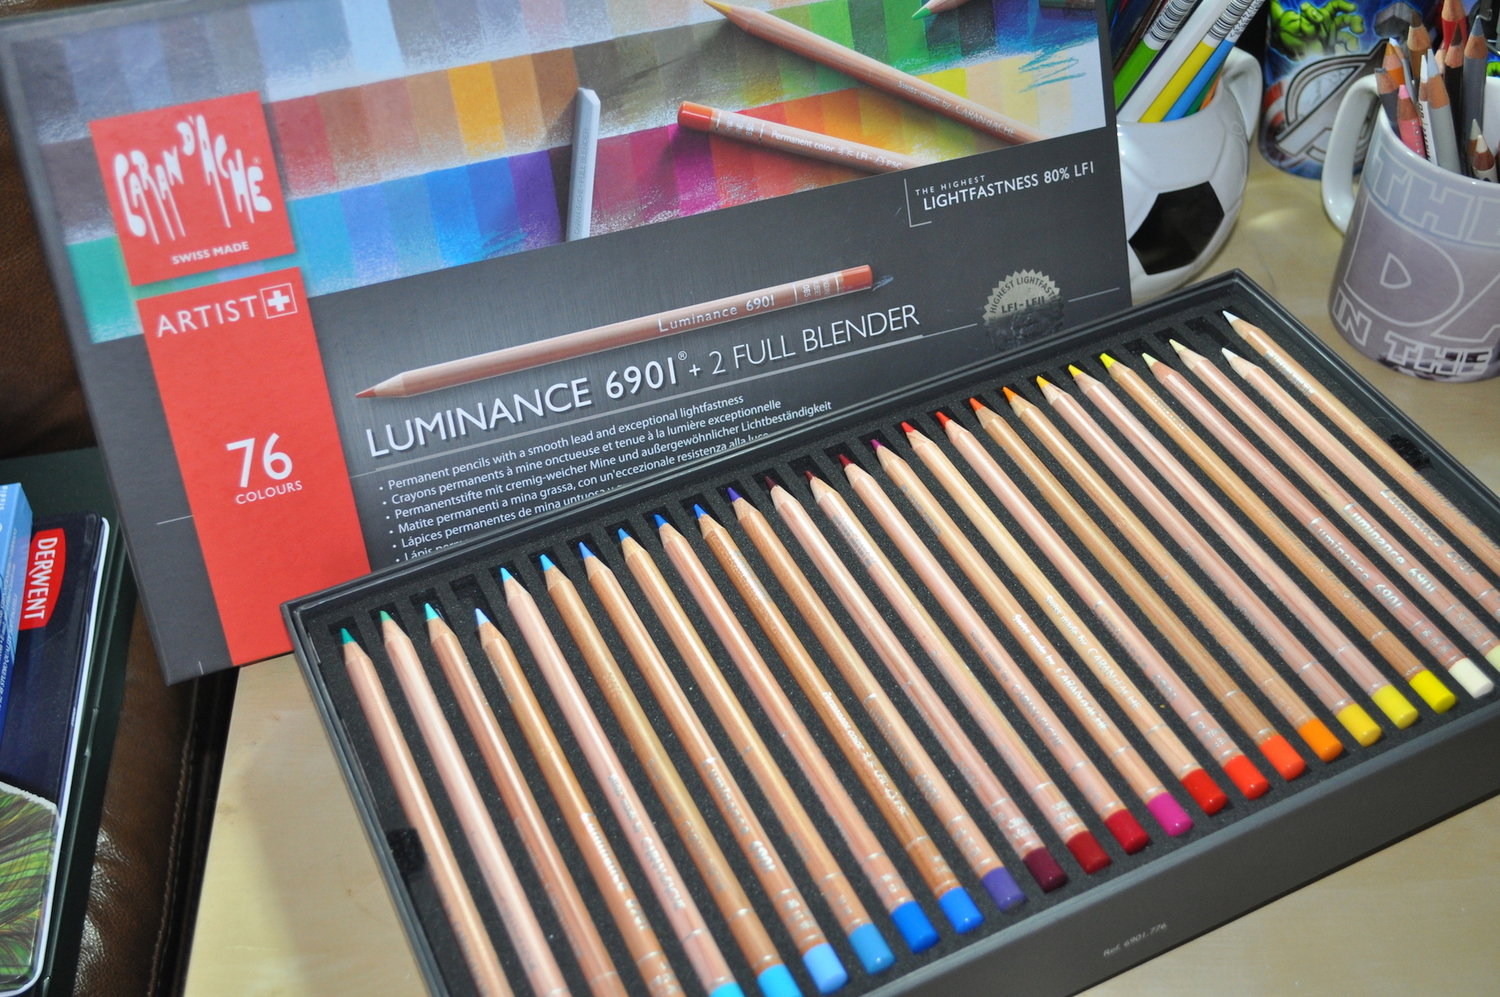 Caran d'Ache Luminance Colored Pencil Sets – ARCH Art Supplies